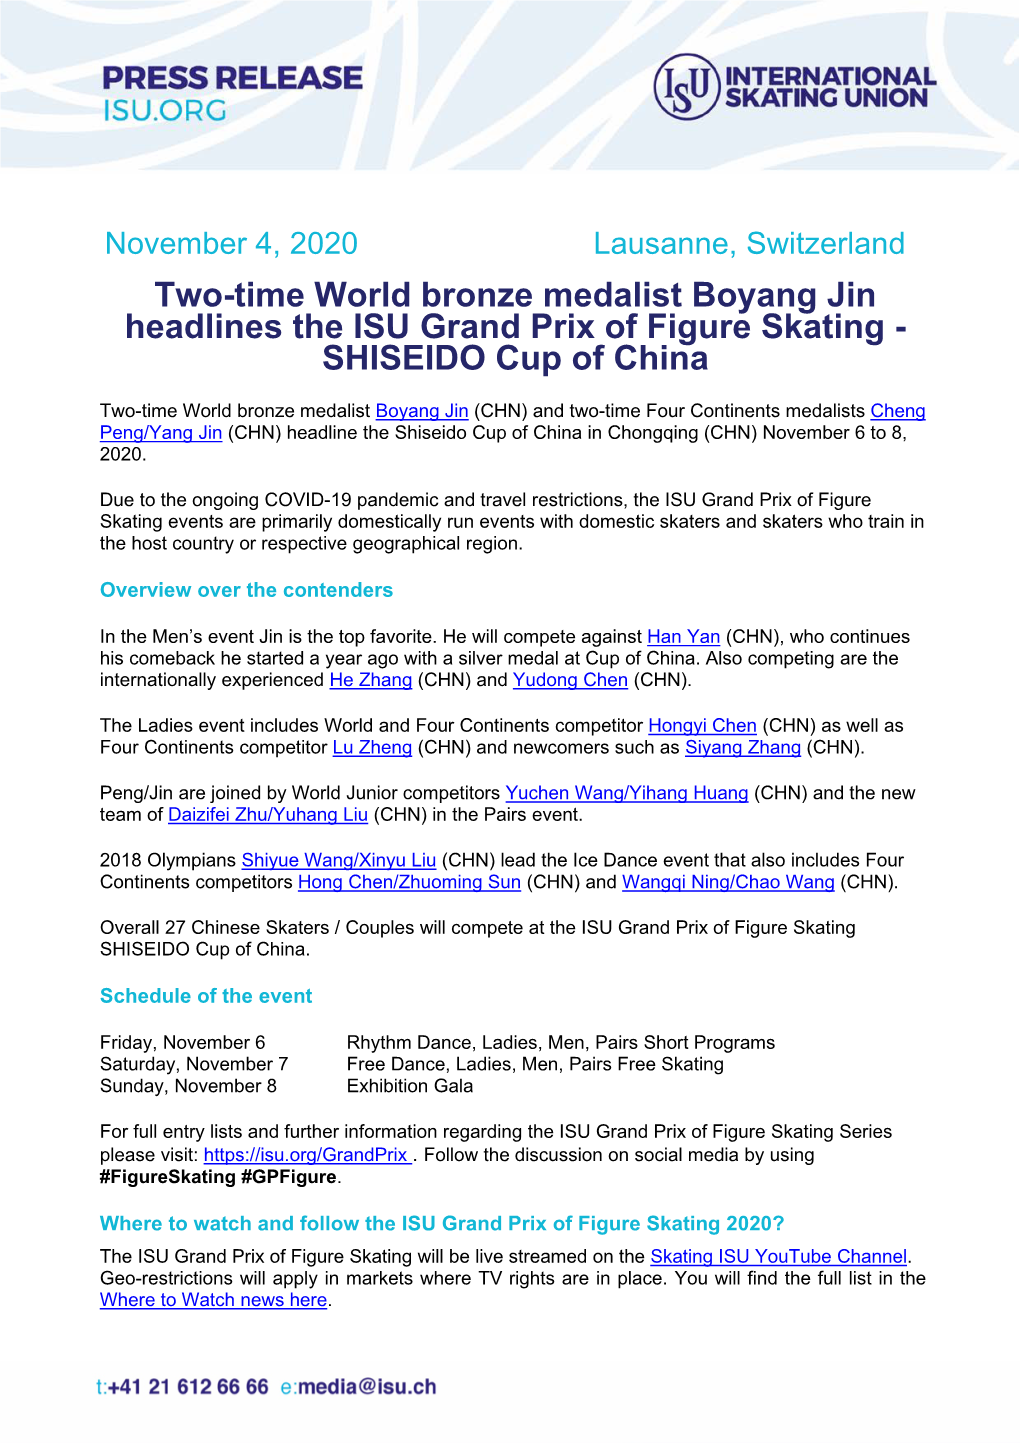 Two-Time World Bronze Medalist Boyang Jin Headlines the ISU Grand Prix of Figure Skating - SHISEIDO Cup of China